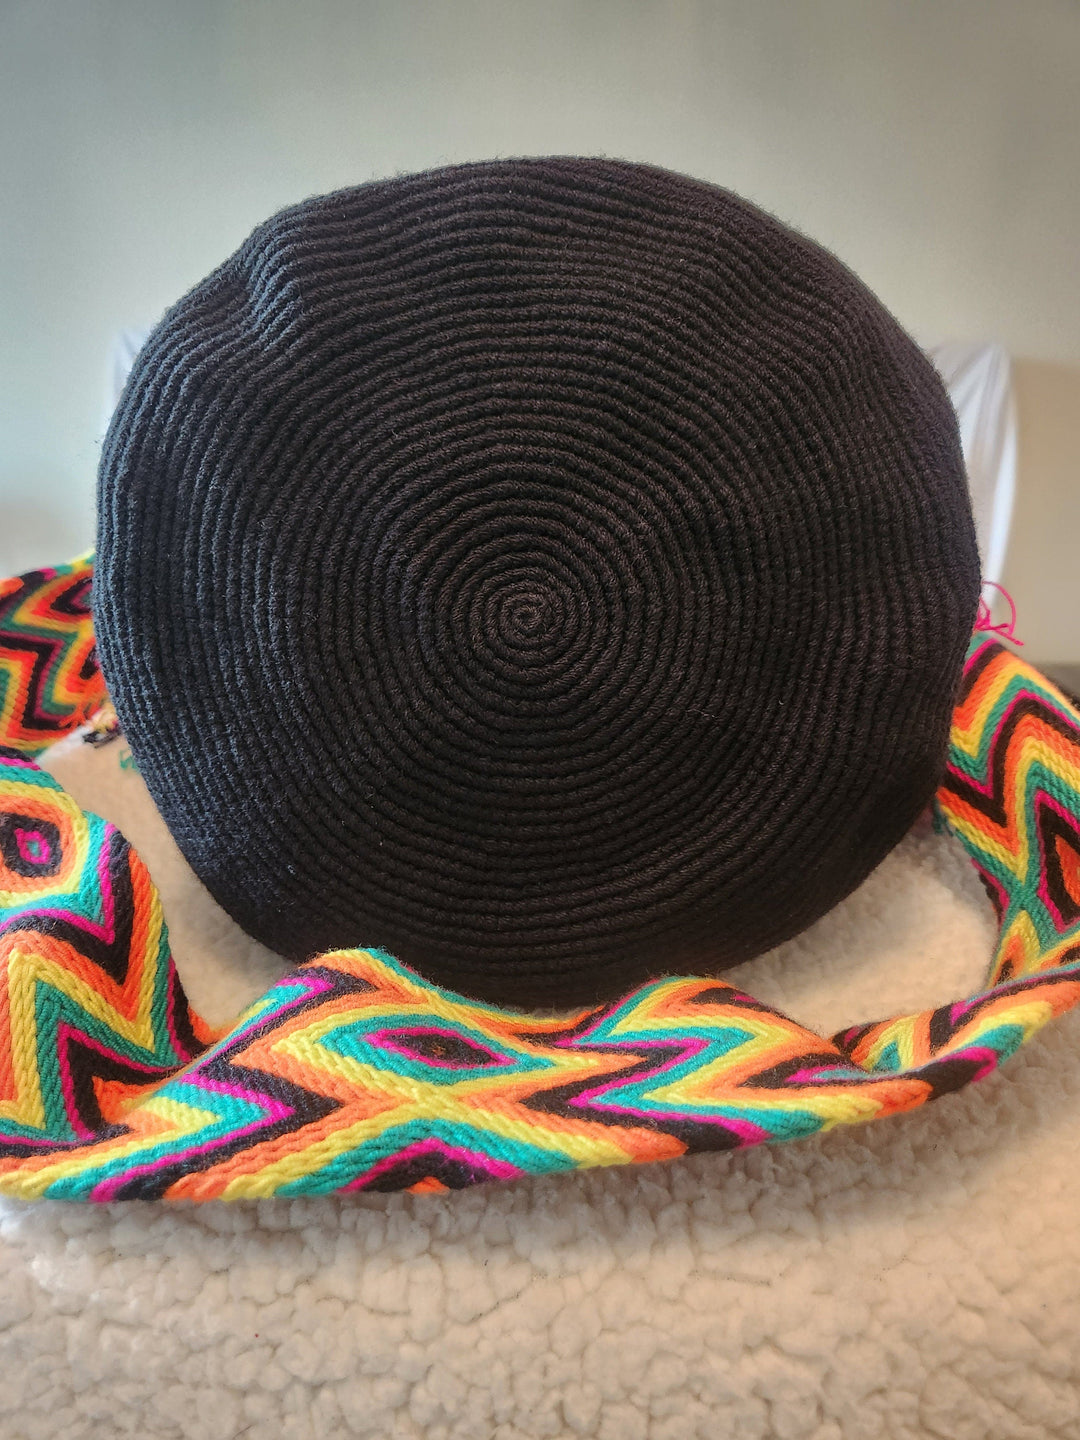 Black crochet bag bottom view